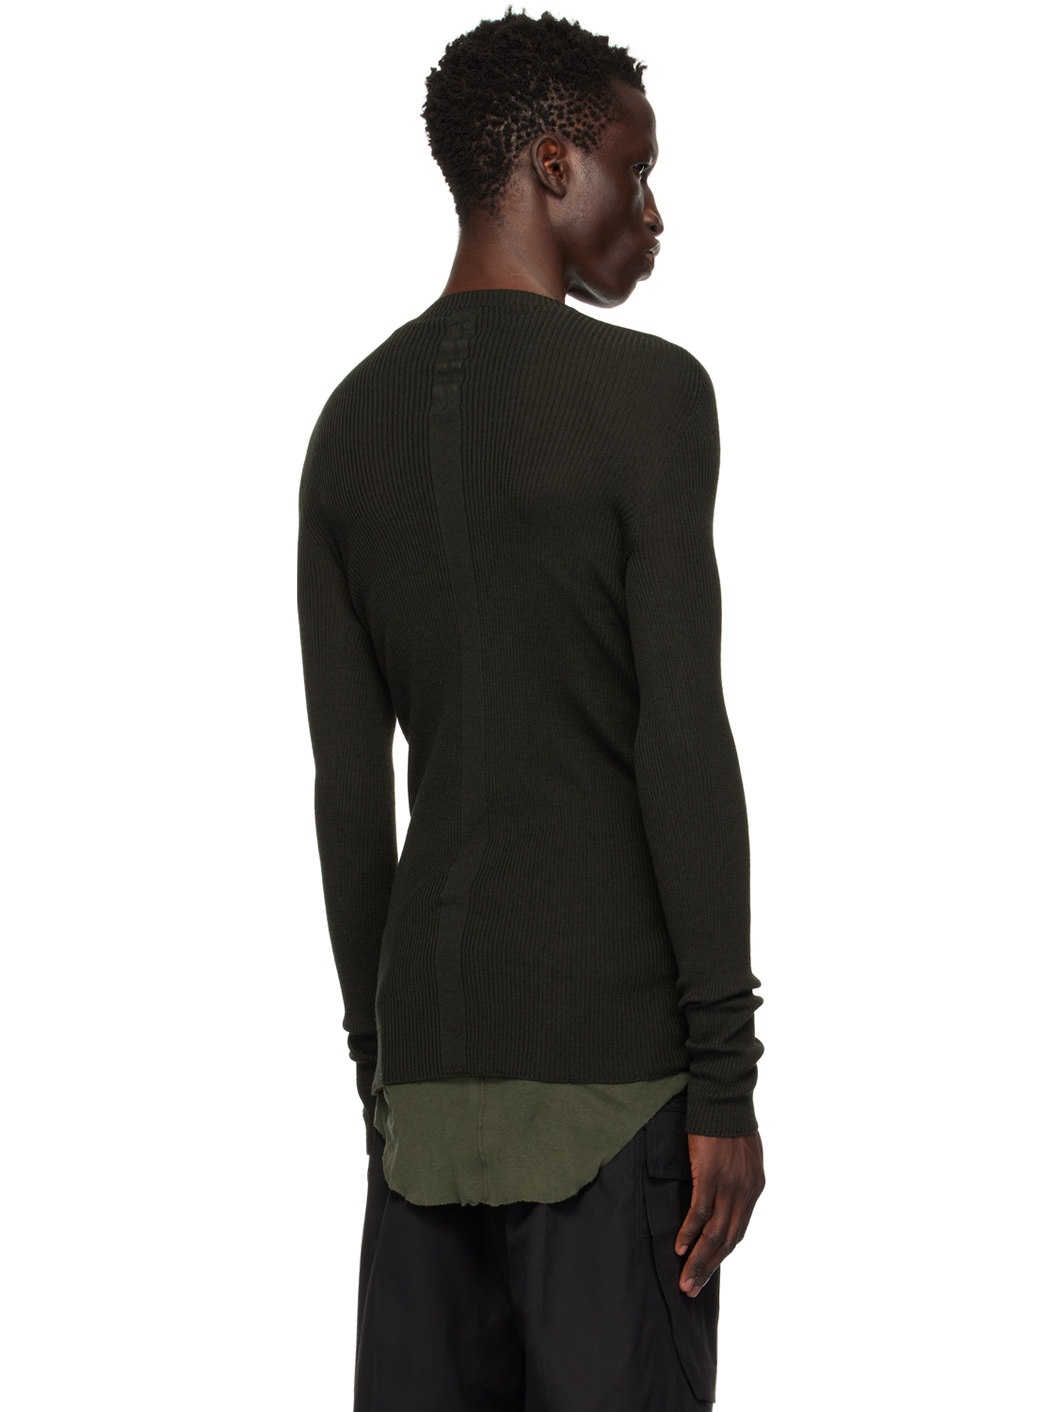 Green Porterville Rib Sweater - 3